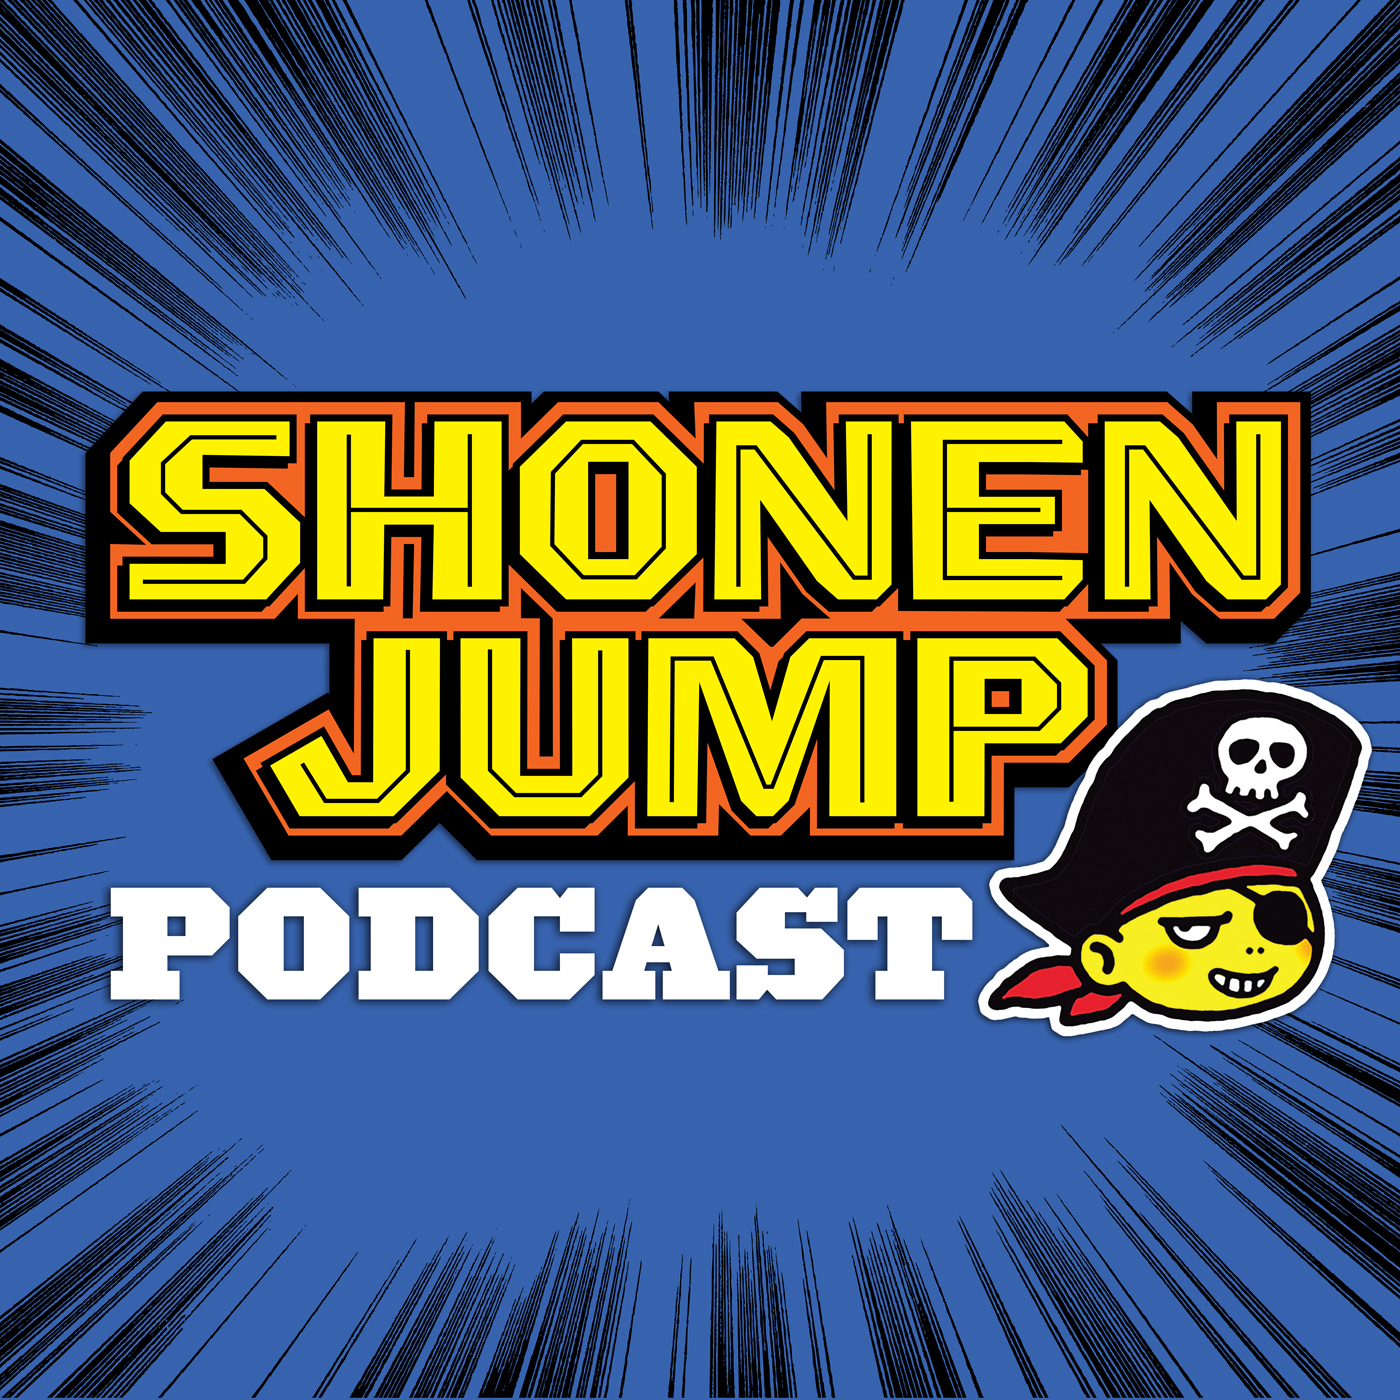 Weekly Shonen Jump Podcast - ON HIATUS